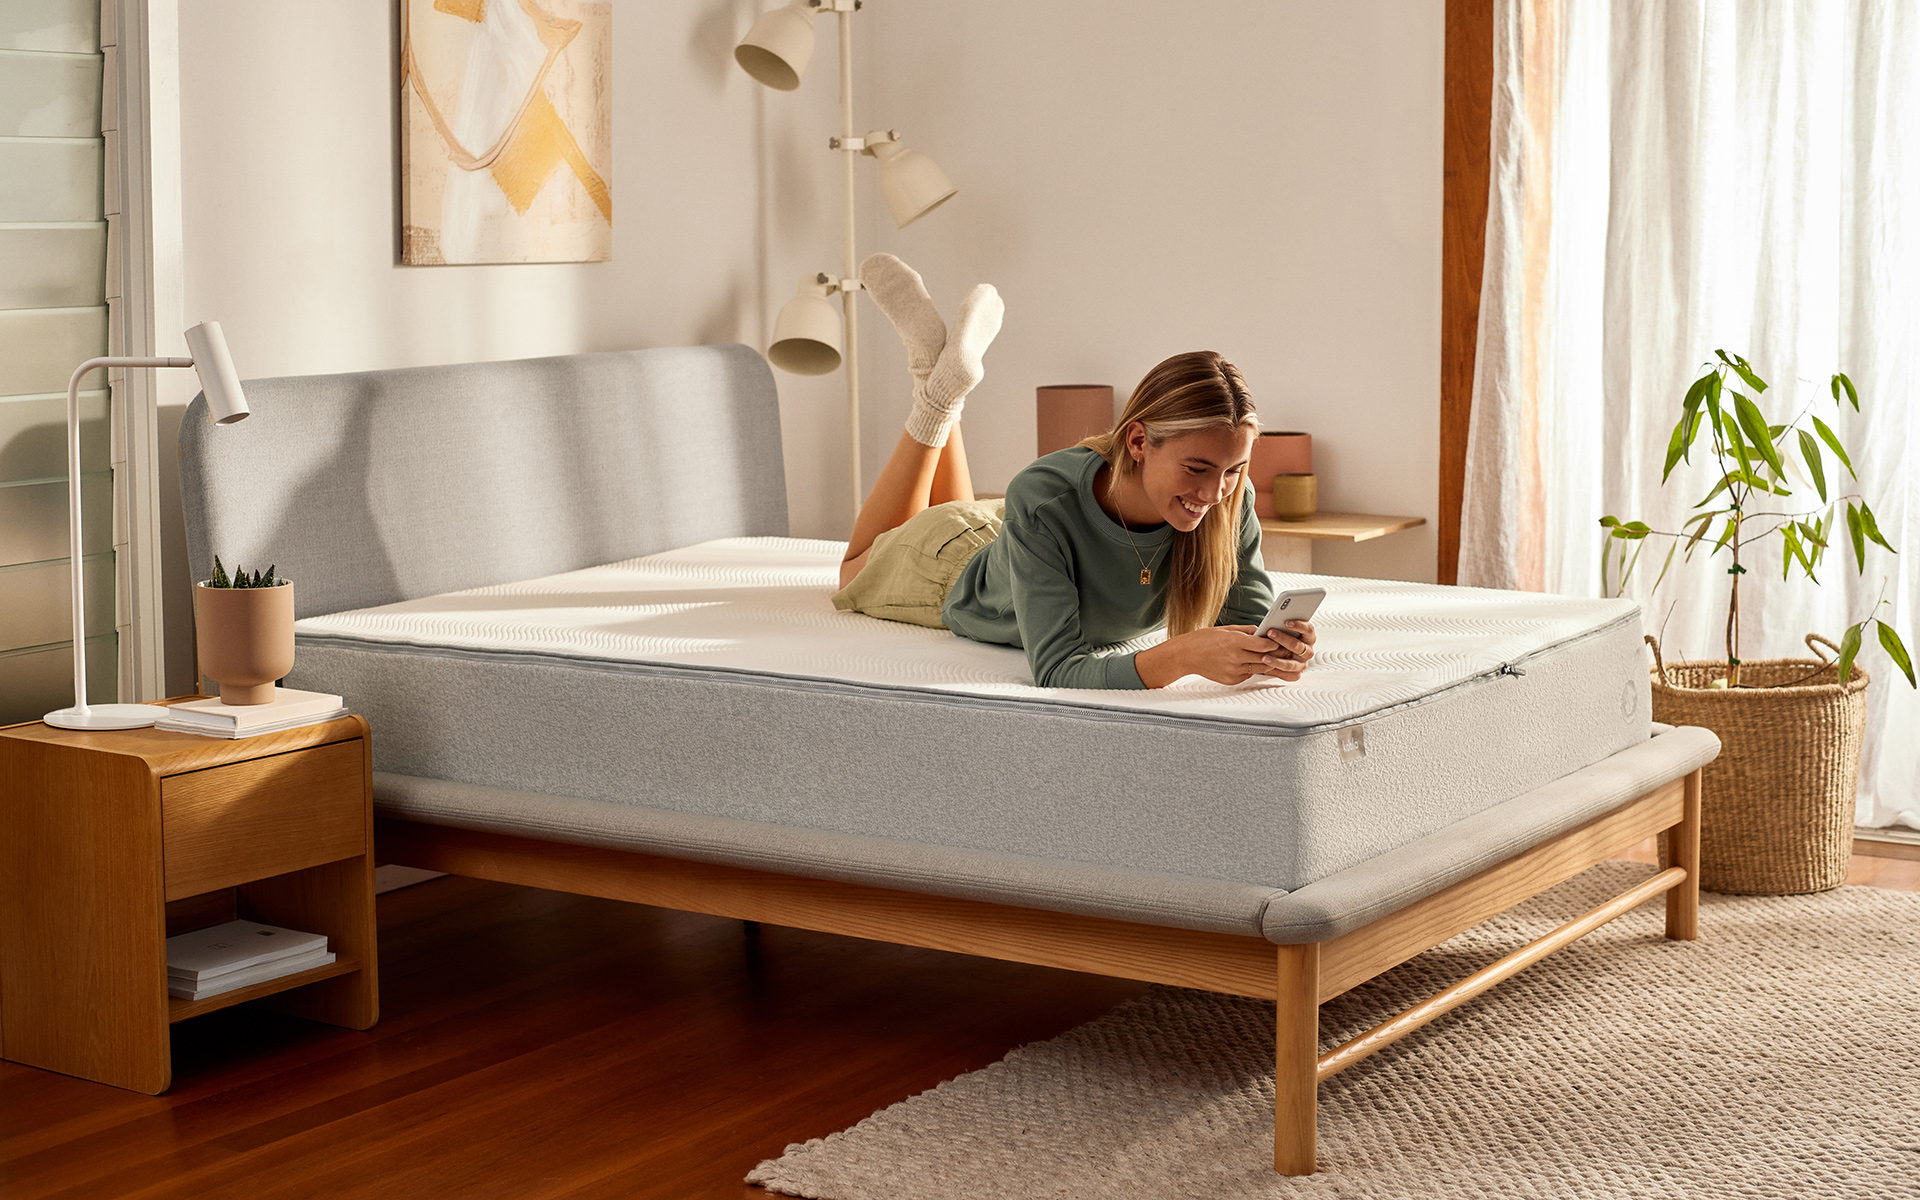 A woman lies on her Koala foam mattress and smiles down at her phone as she considers the advantages of a Koala mattress over a pocket springs mattress